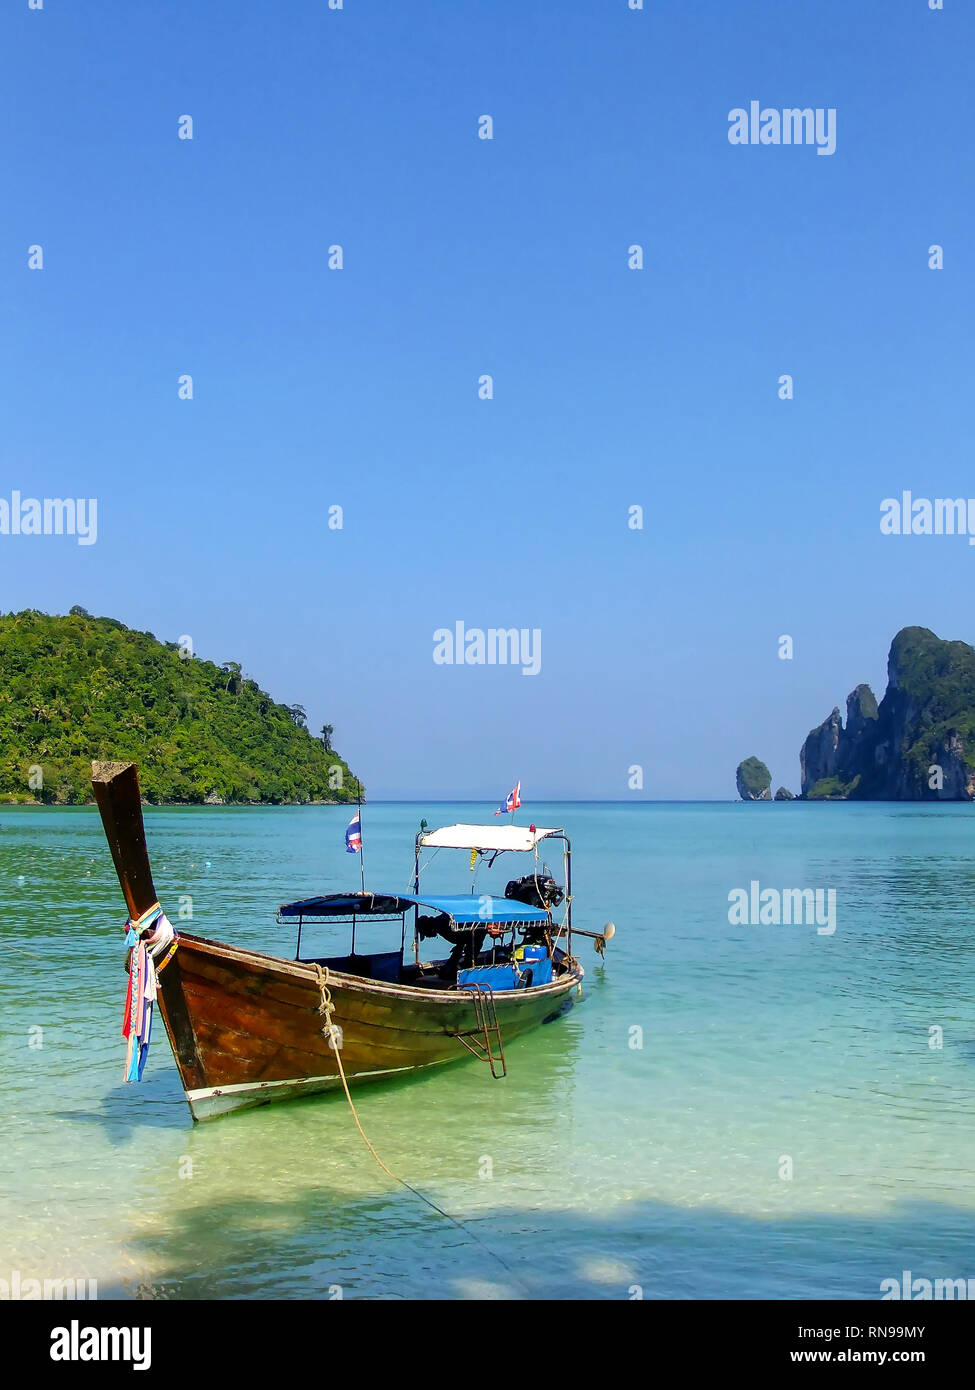 Longtail-Boot verankert am Ao Loh Dalum Strand auf Phi Phi Don Island, Provinz Krabi, Thailand. Koh Phi Phi Don ist Teil eines marine National Park. Stockfoto